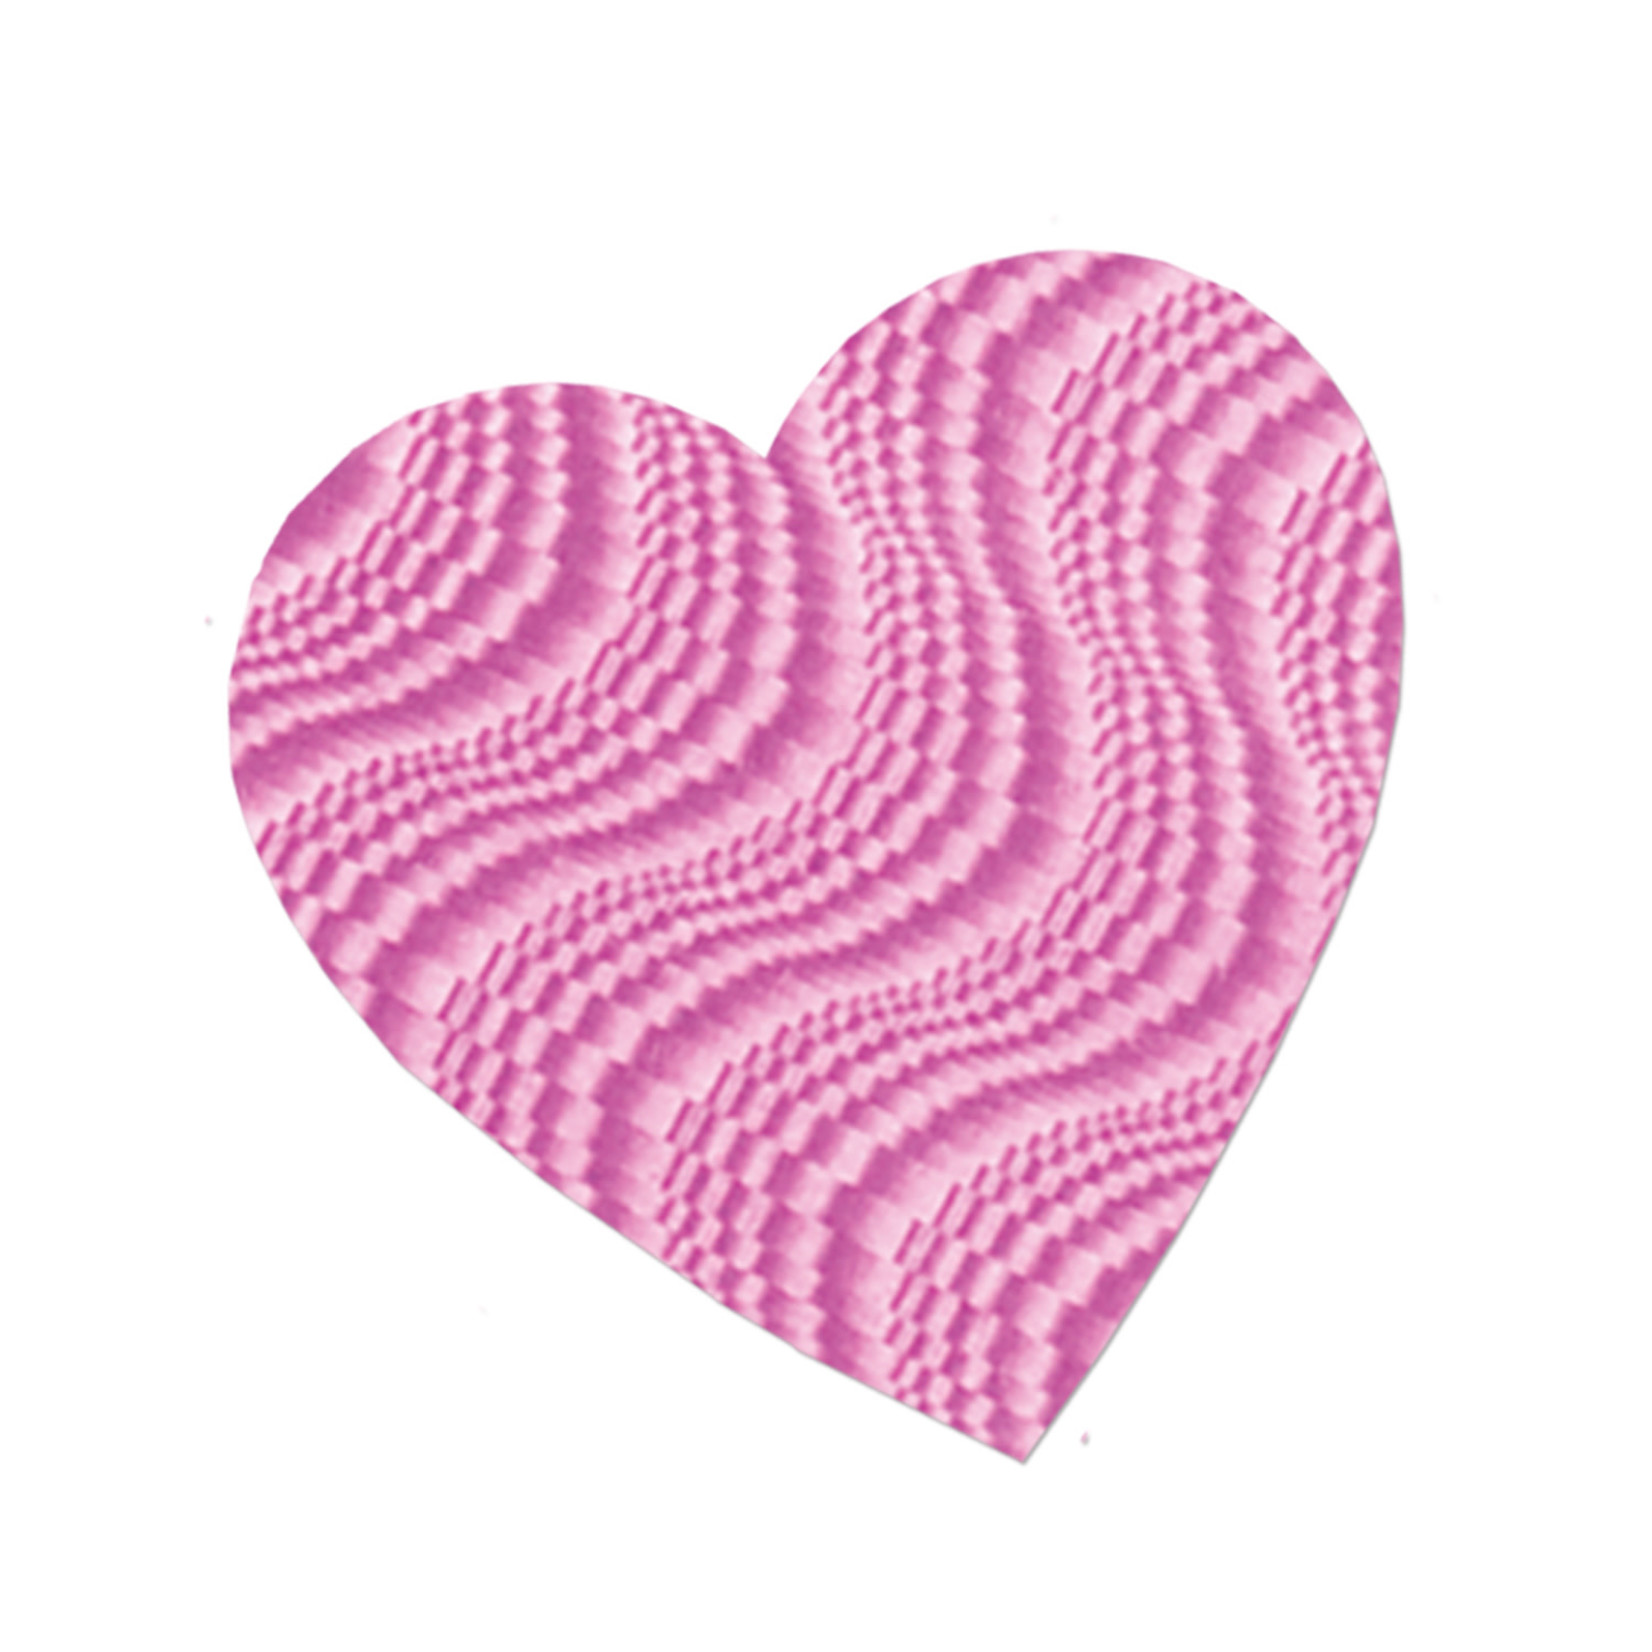 Beistle 4" Embossed Pink Heart - 1ct.